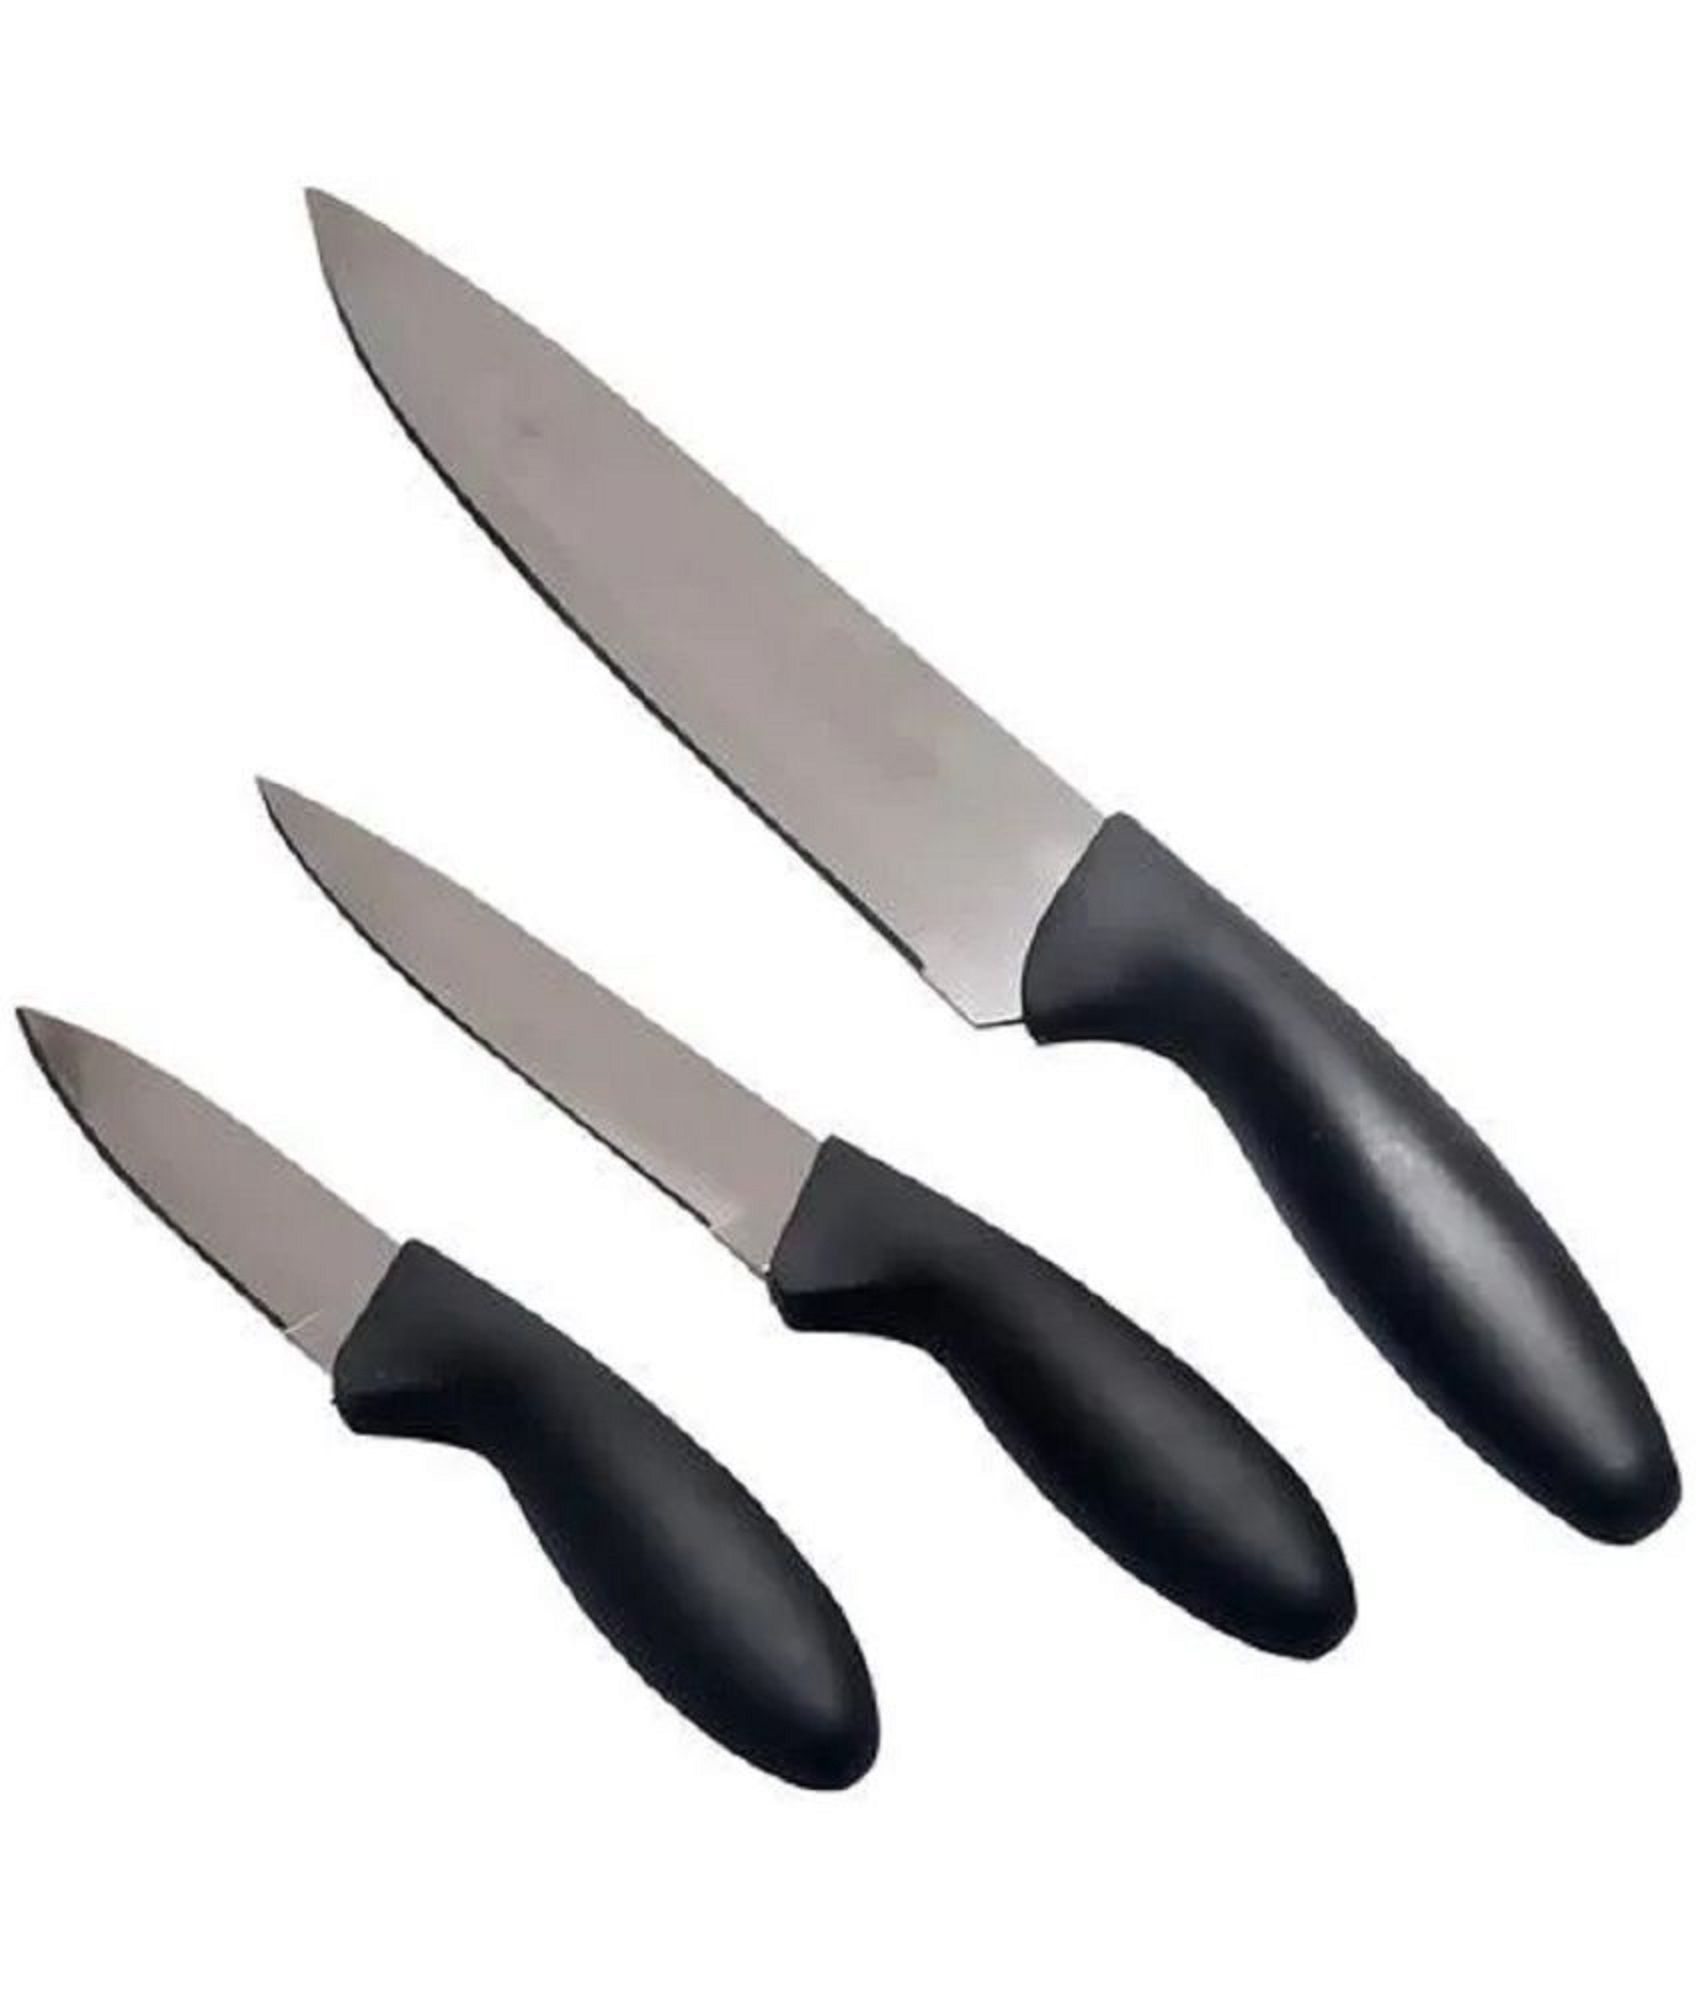     			Analog Kitchenware Kitchen Utility Knife Set of 3U